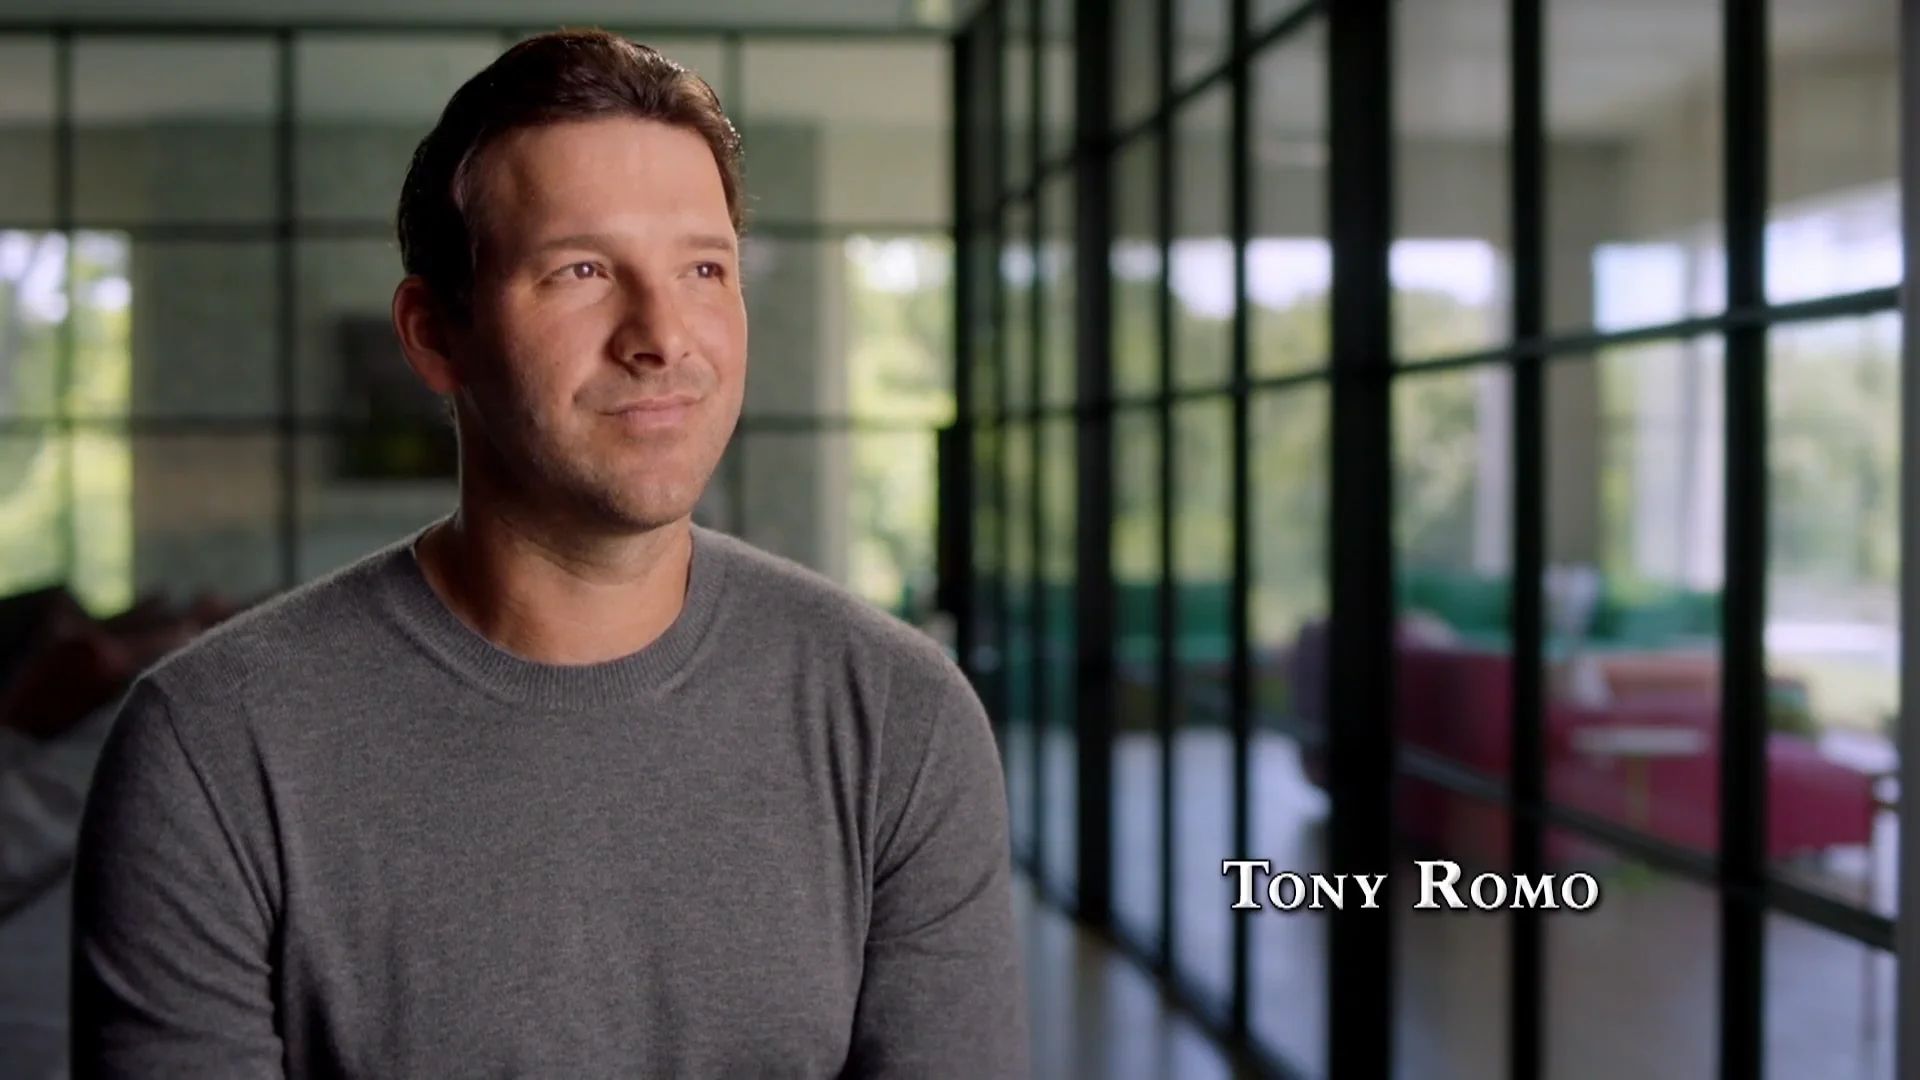 Tony Romo From Undrafted Quarterback to Dallas Cowboys Legend ¦ A Football  Life on Vimeo